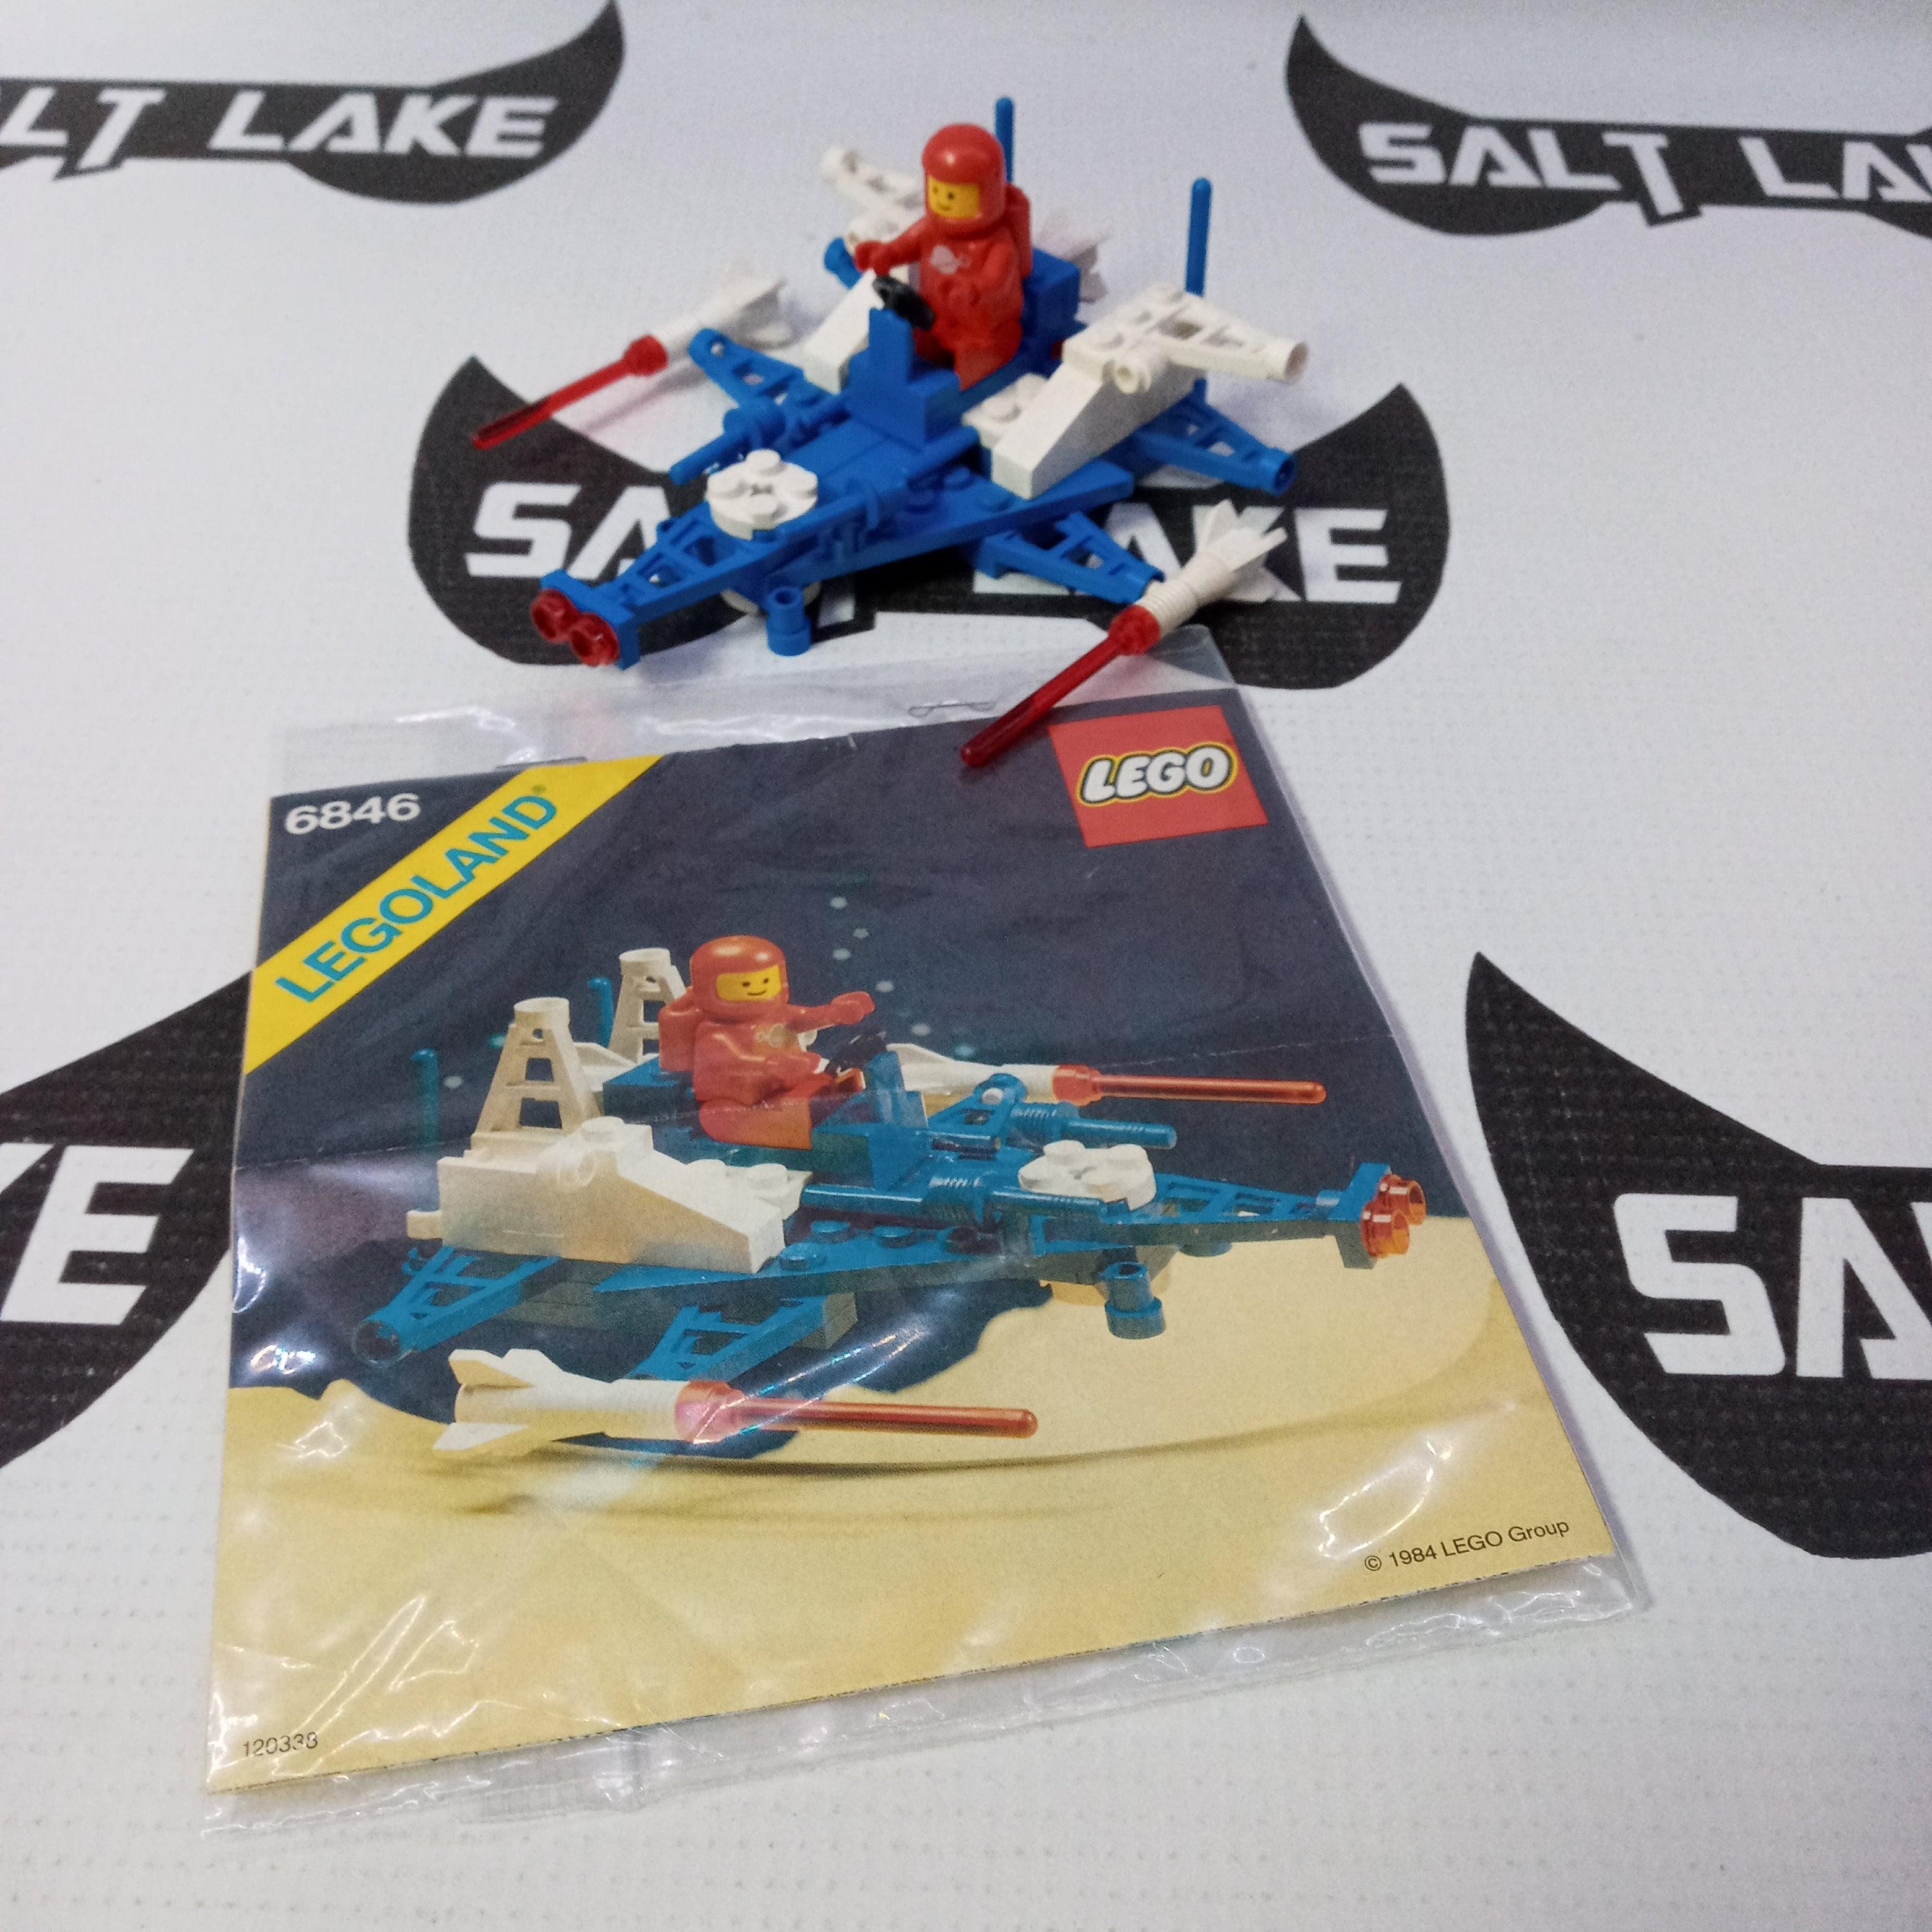 Lego Legoland 1984 Tri-Star Voyager - Rogue Toys